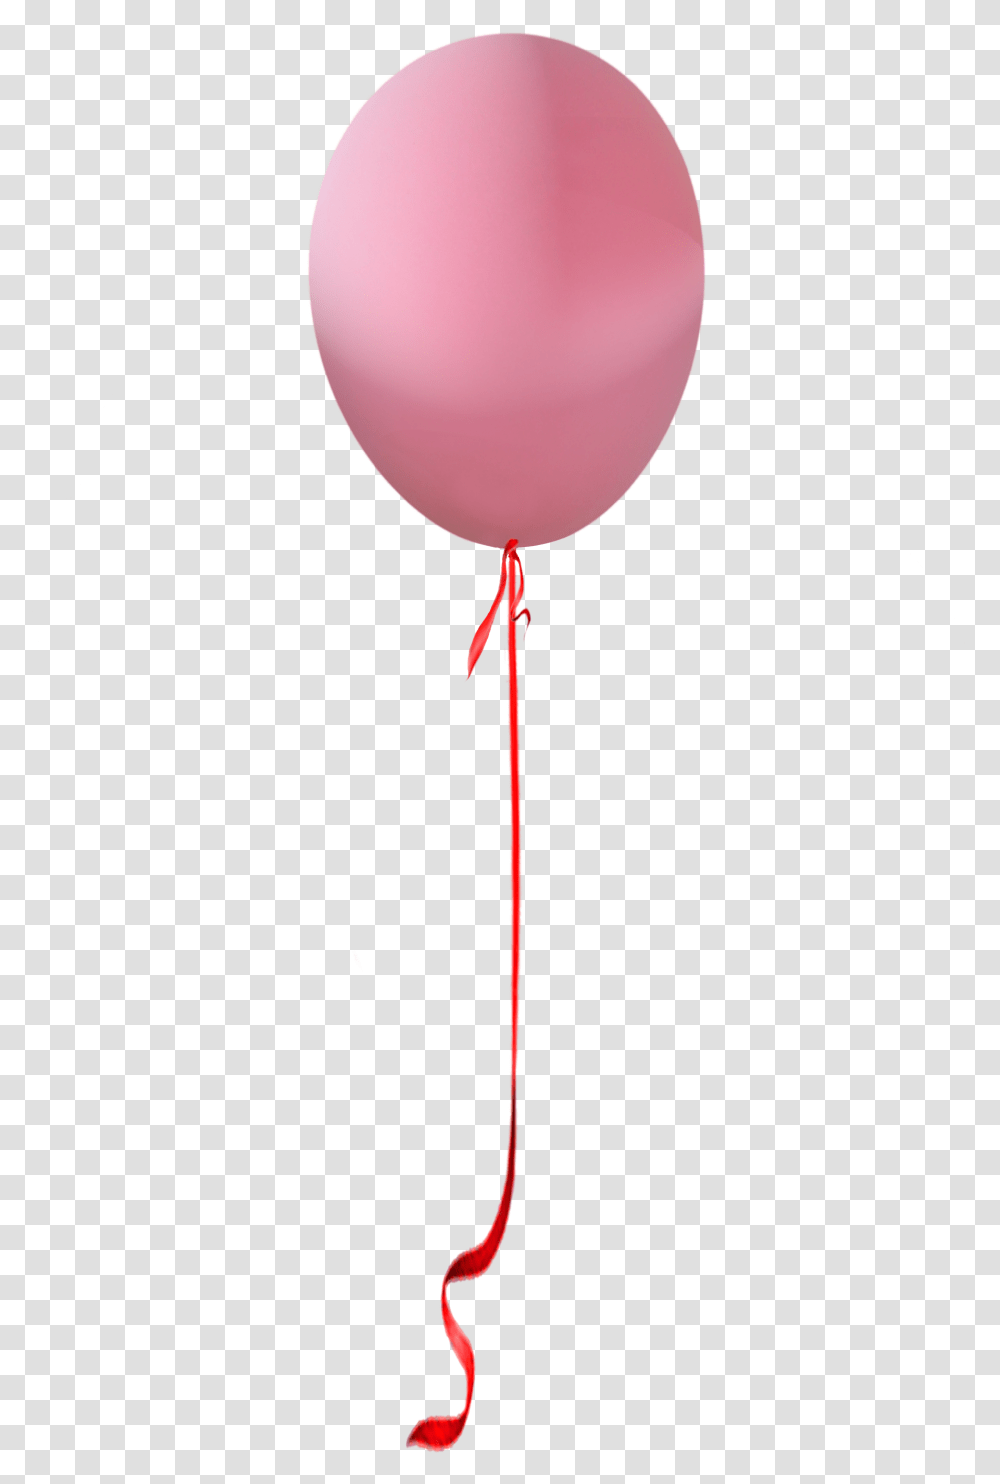 Download Free Hd Balloon String Balloon Transparent Png